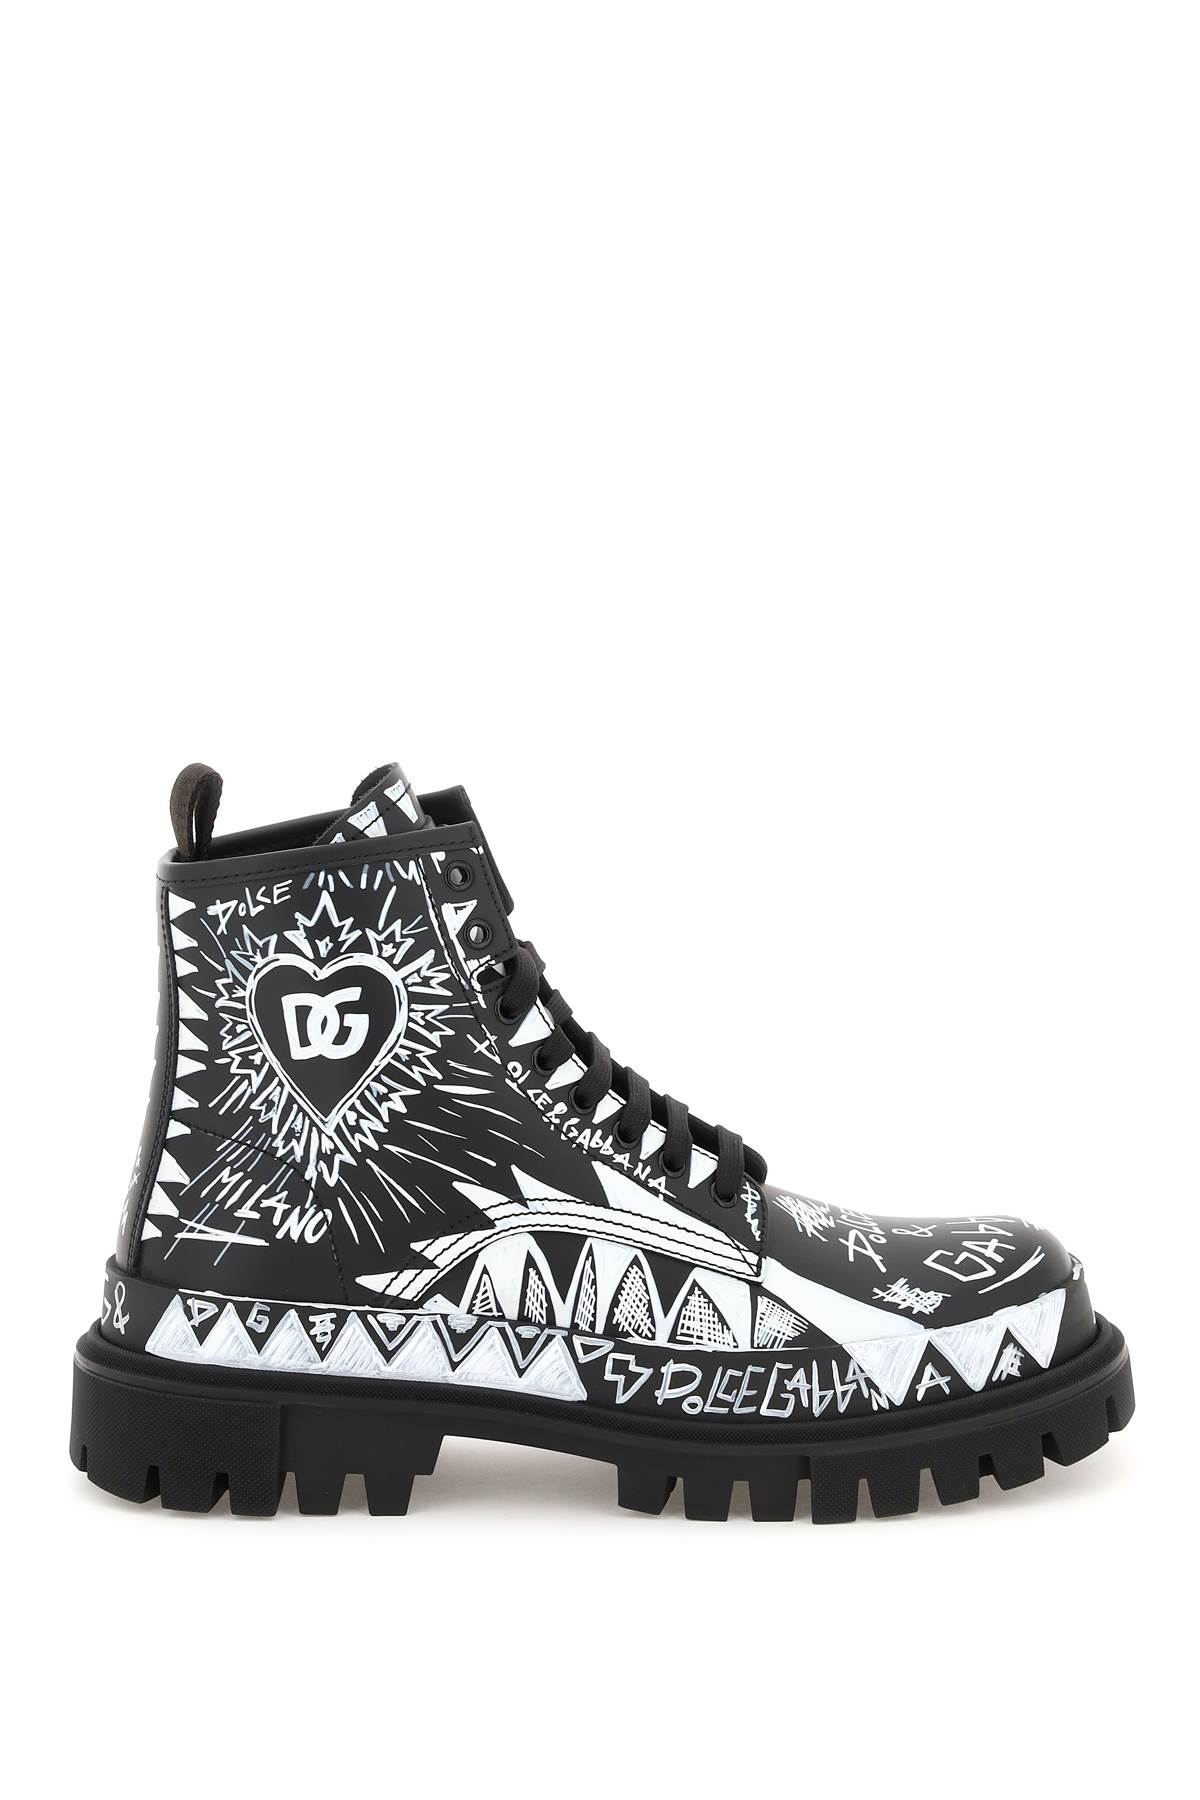 Dolce & Gabbana Graffiti Print Leather Hi-trekking Boots